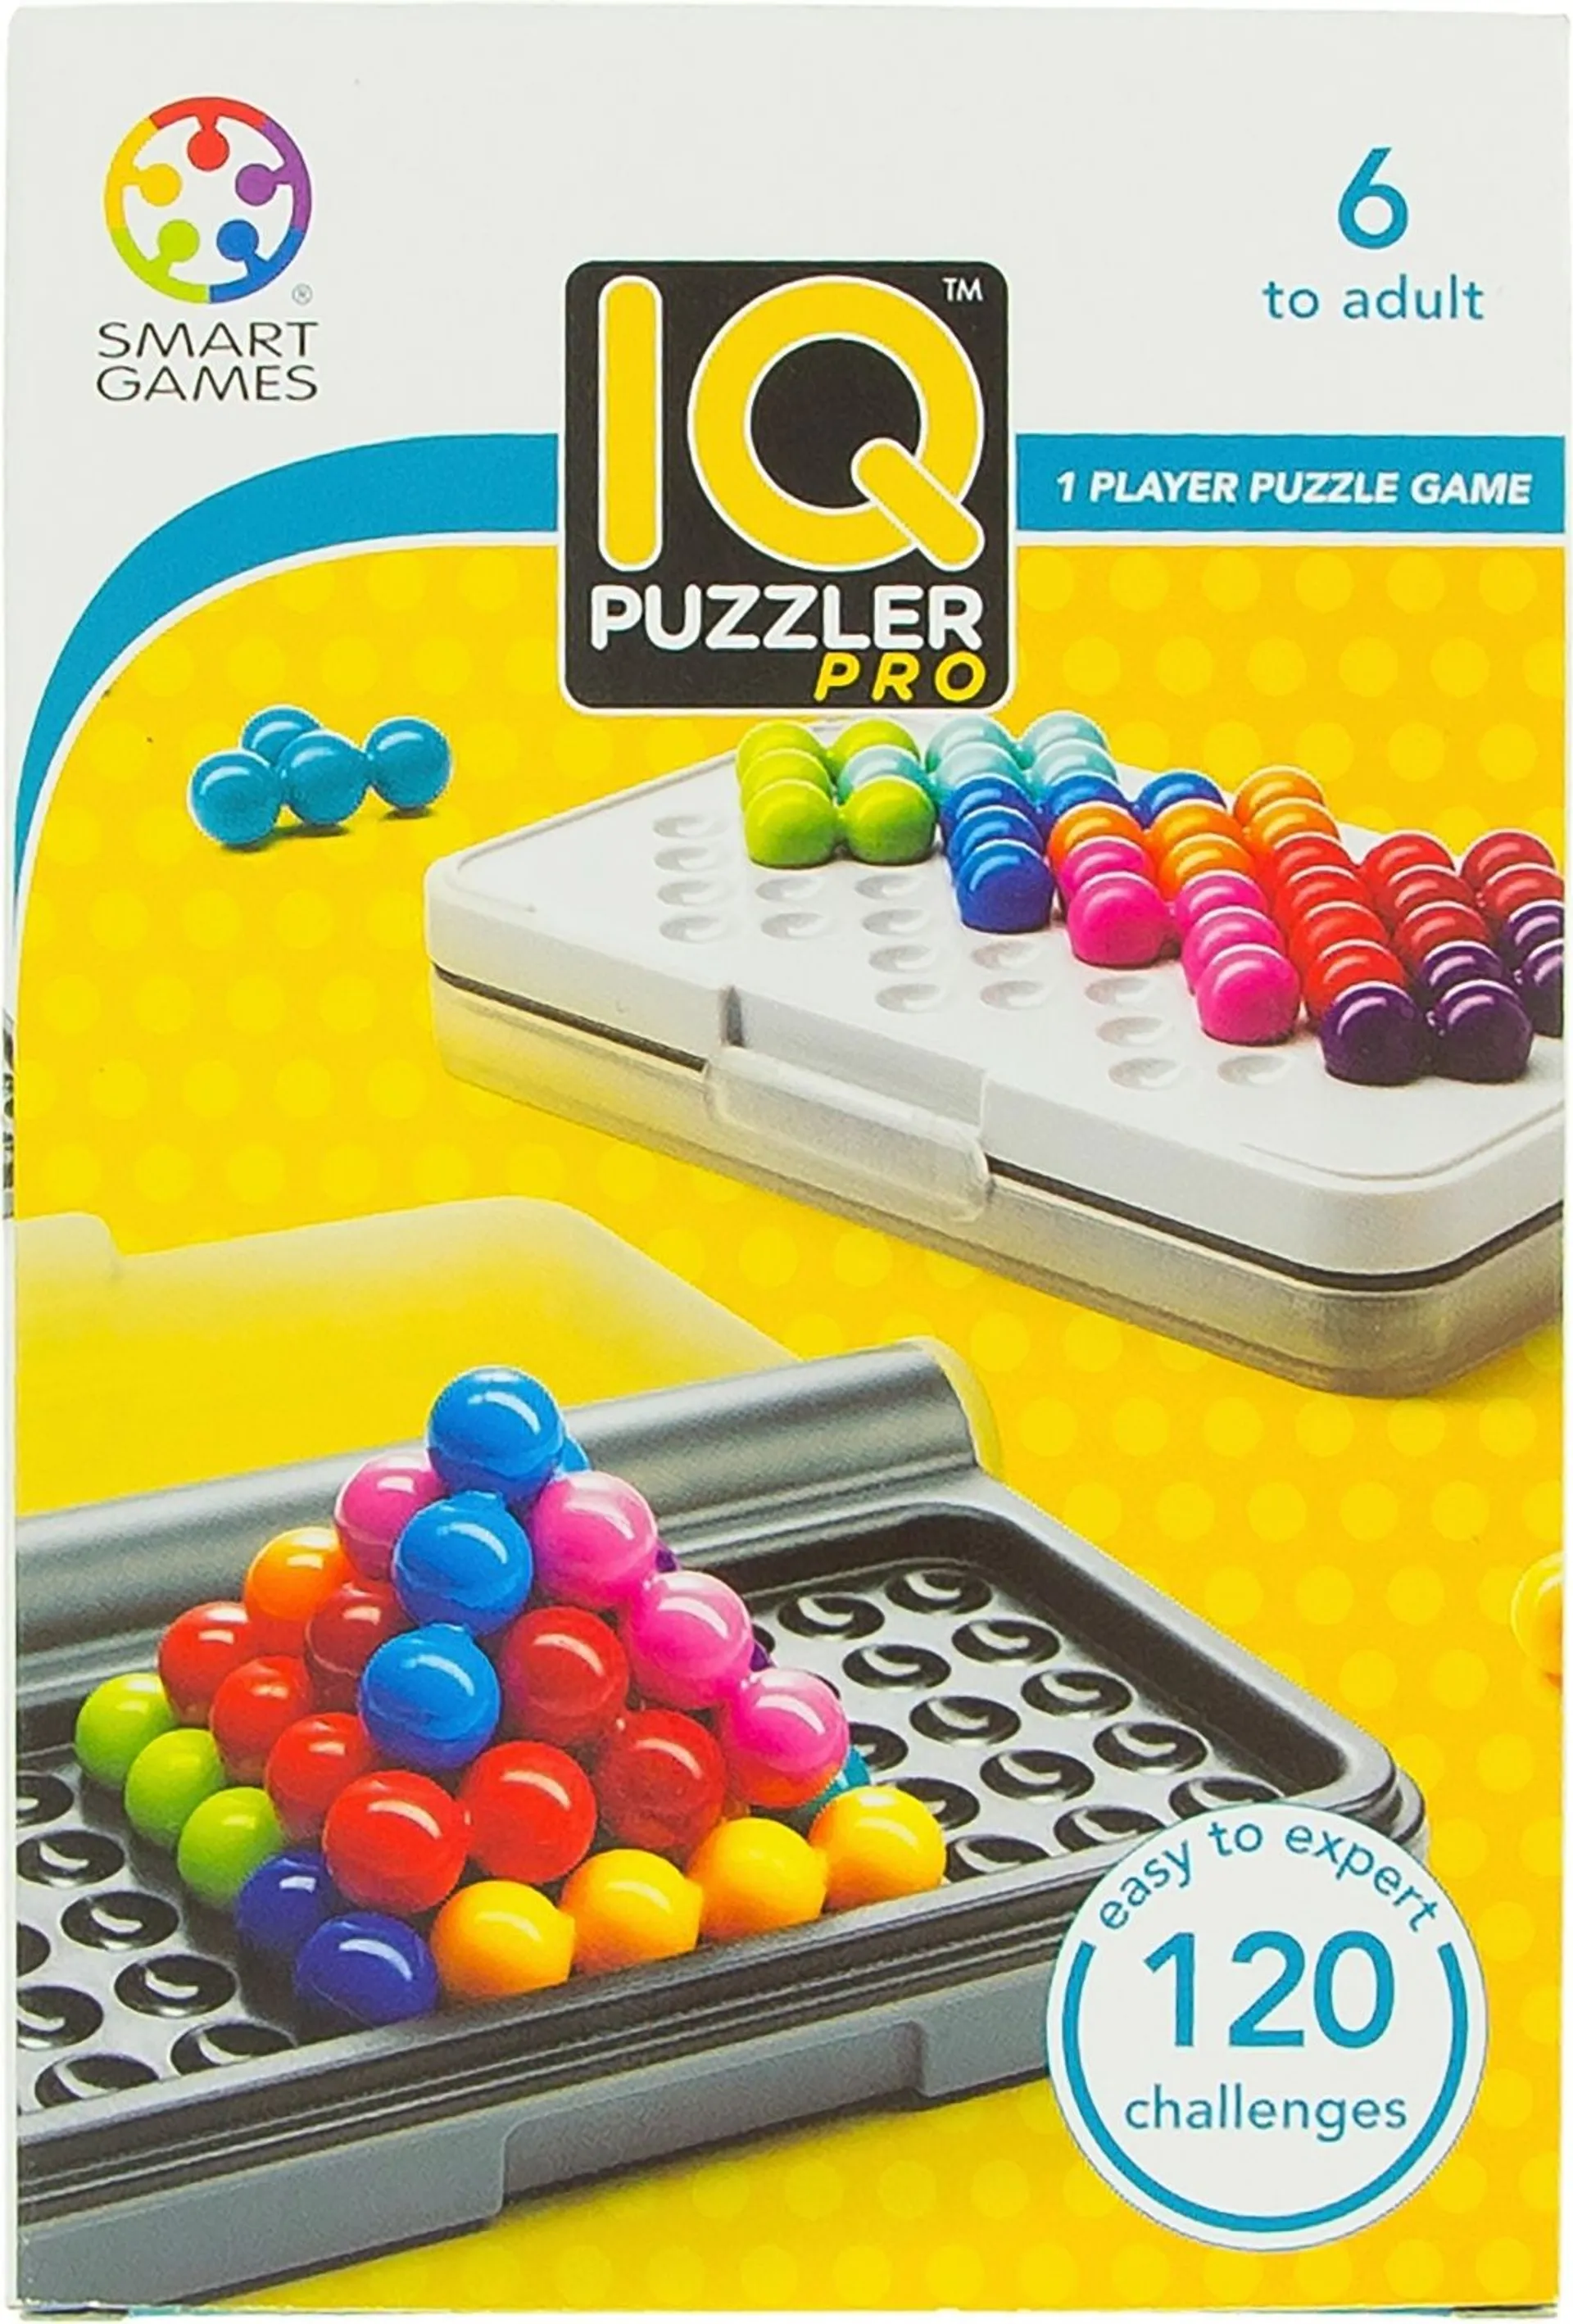 Smartgames IQ puzzler pro matkapeli - 1